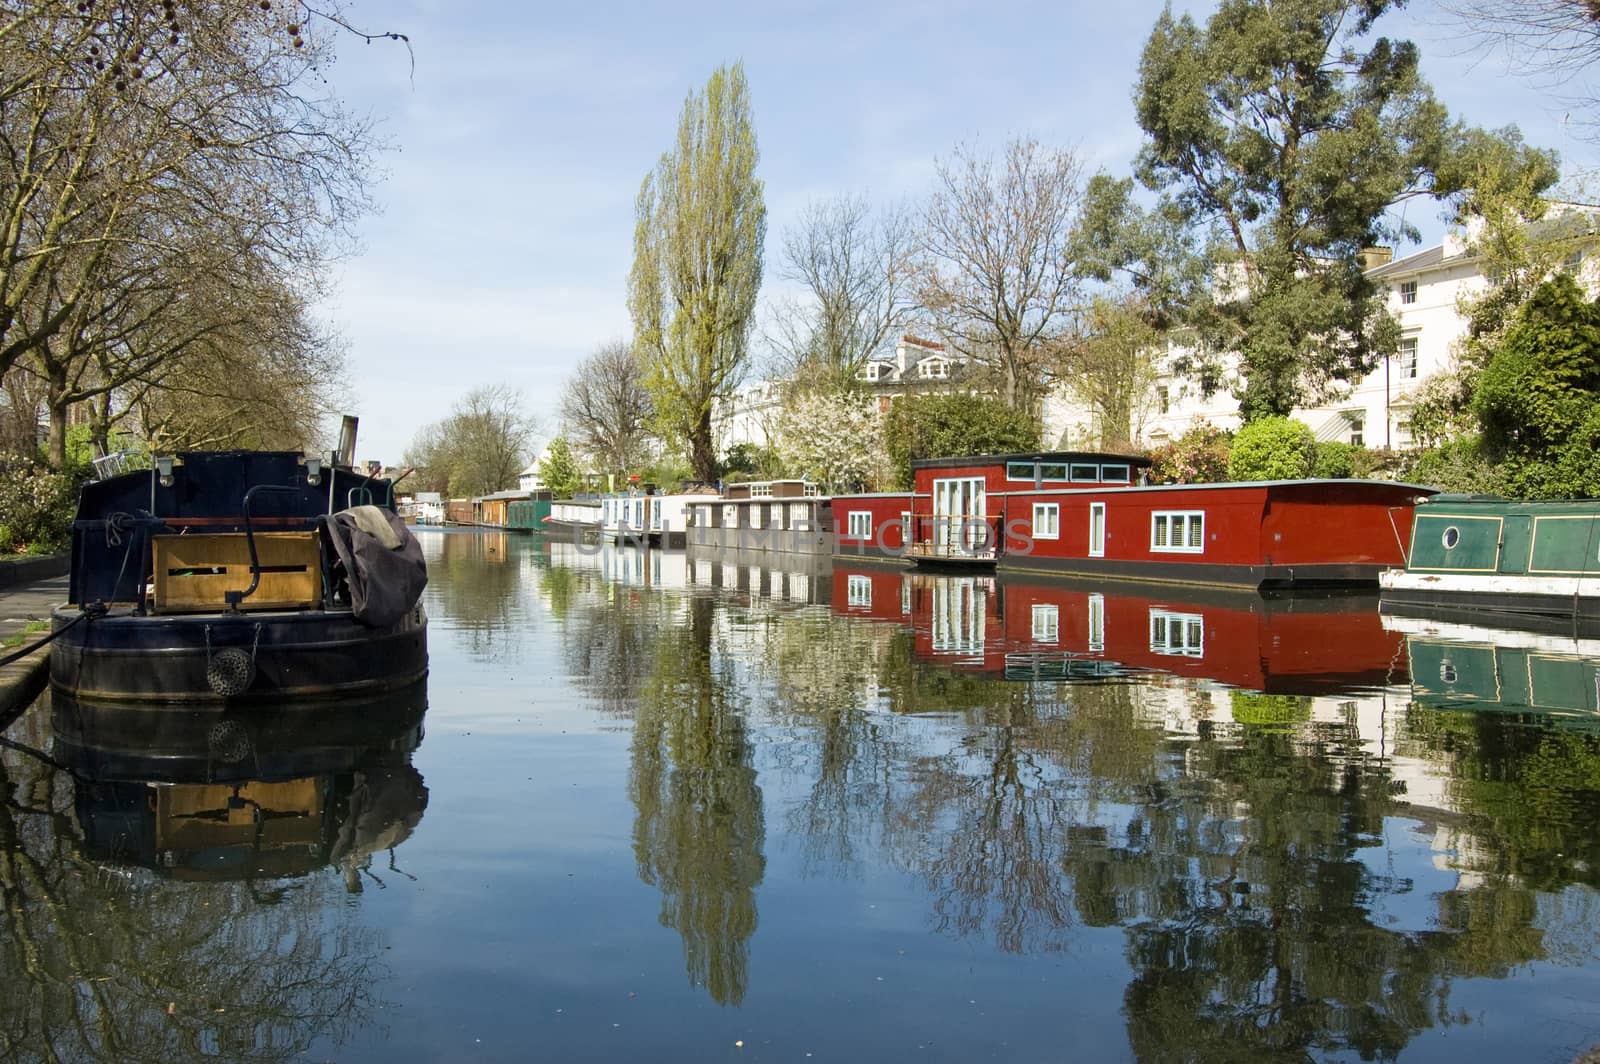 Houseboats, Little Venice, London by BasPhoto